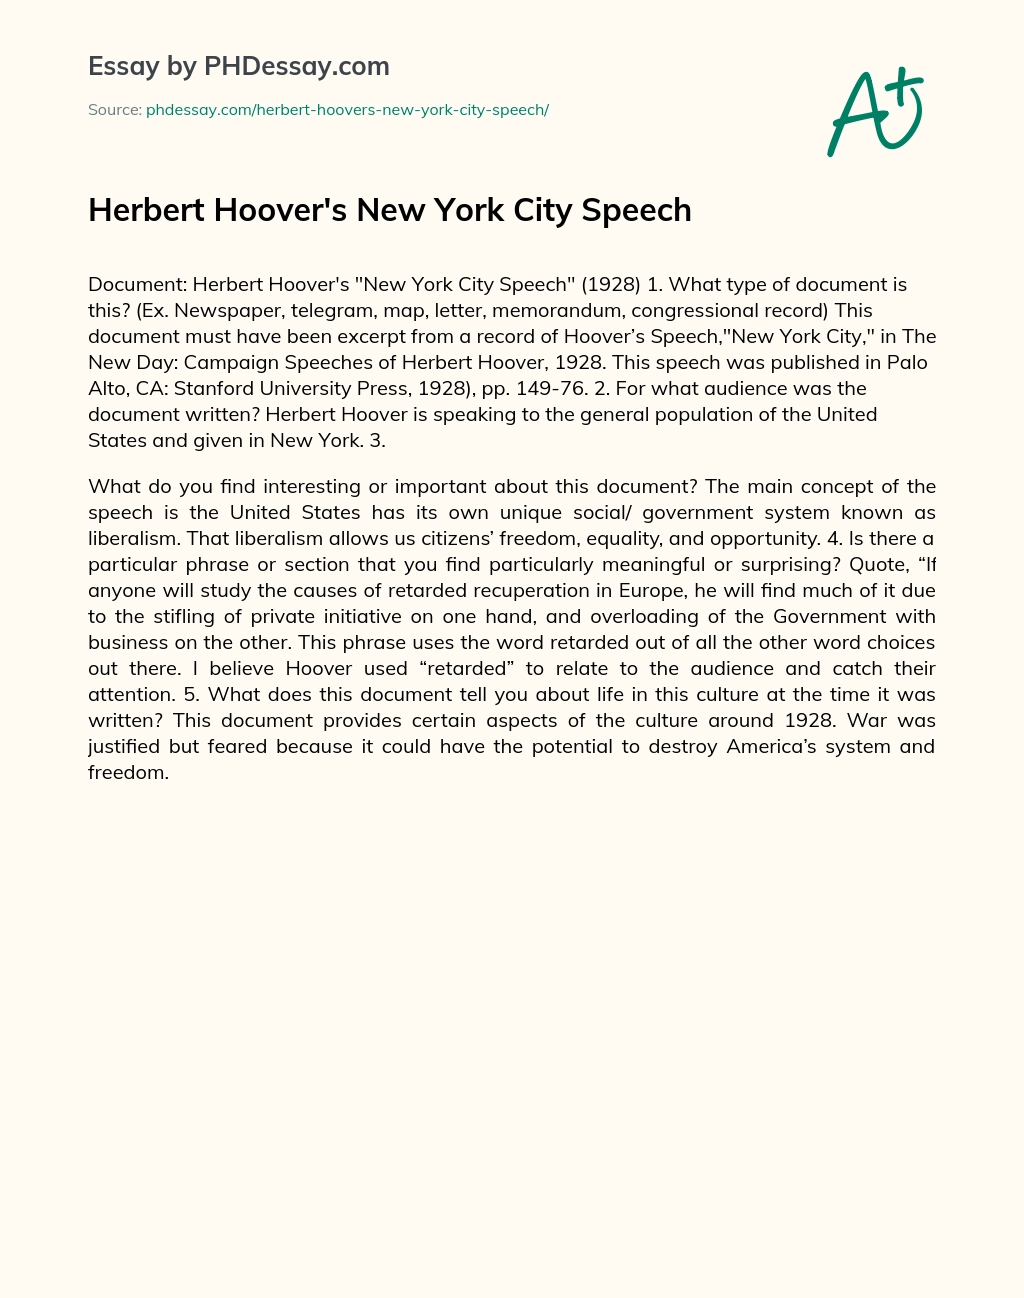 Herbert Hoover’s New York City Speech essay